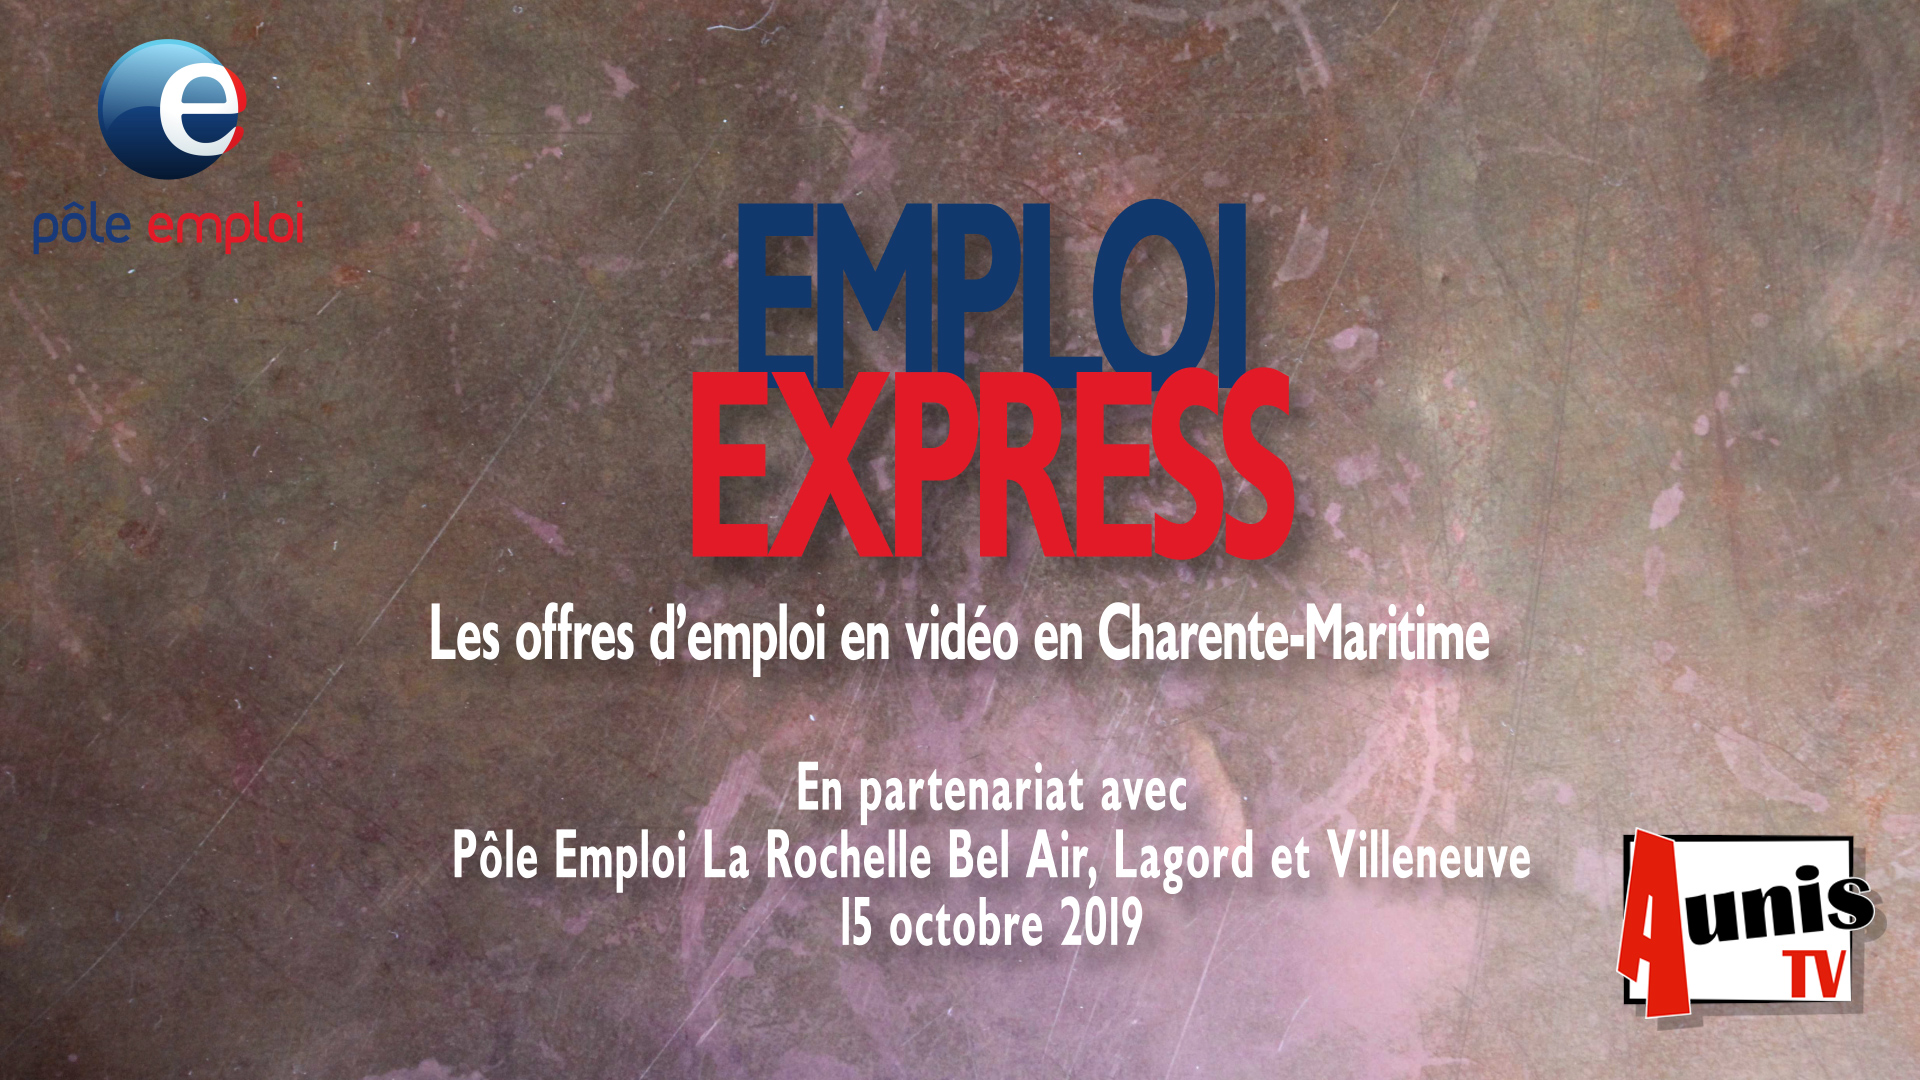 Emploi express La Rochelle